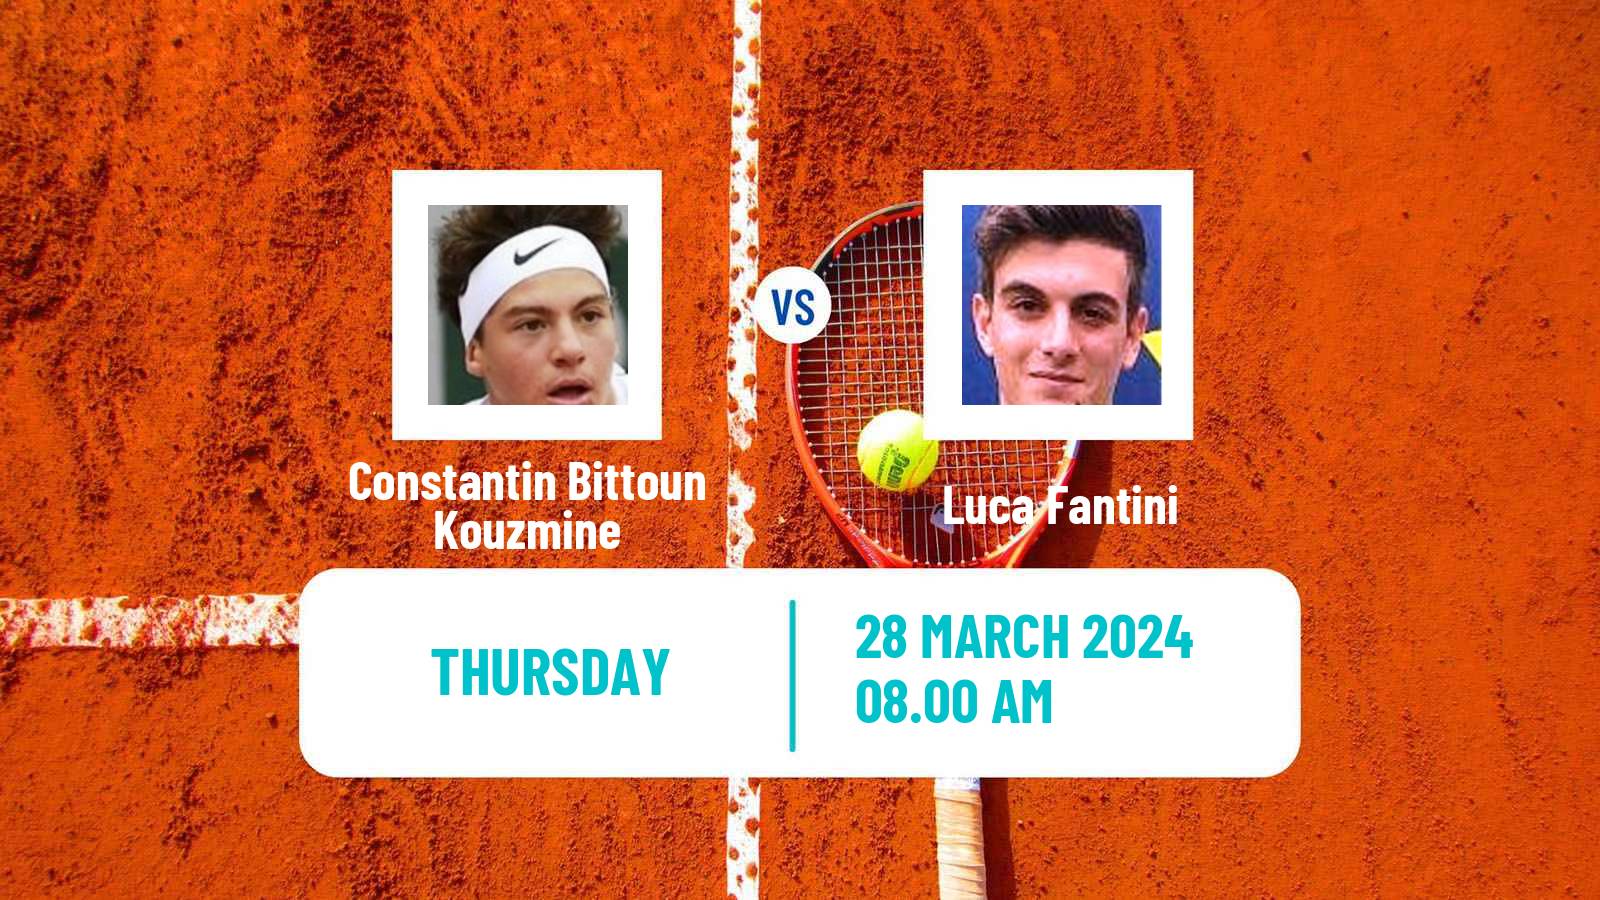 Tennis ITF M15 Monastir 13 Men Constantin Bittoun Kouzmine - Luca Fantini